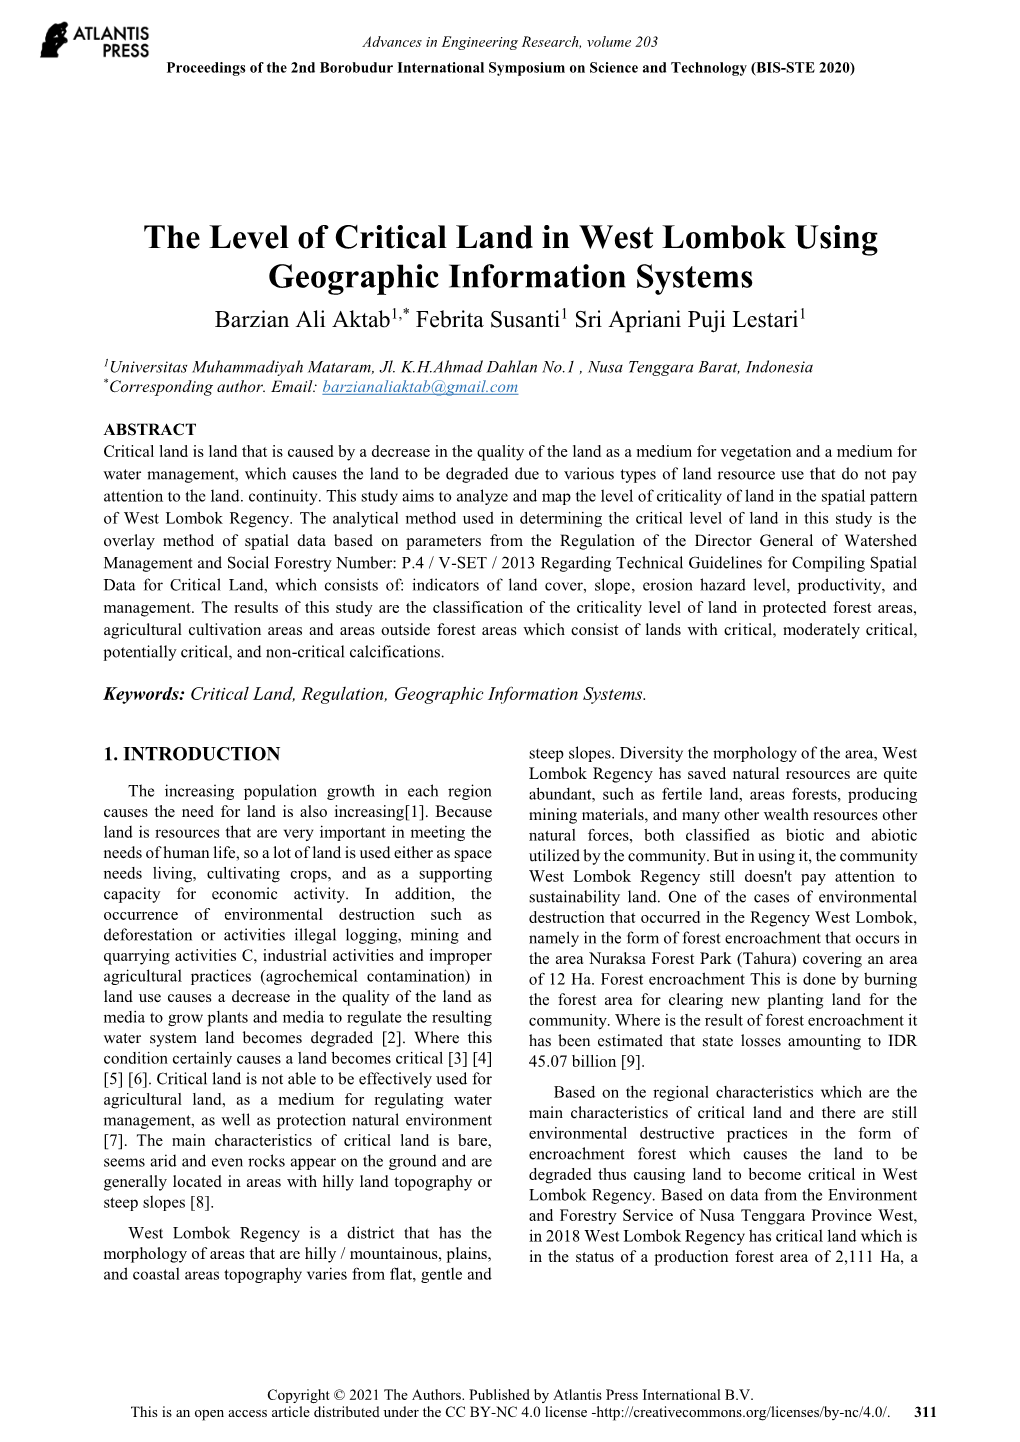 The Level of Critical Land in West Lombok Using Geographic Information Systems Barzian Ali Aktab1,* Febrita Susanti1 Sri Apriani Puji Lestari1